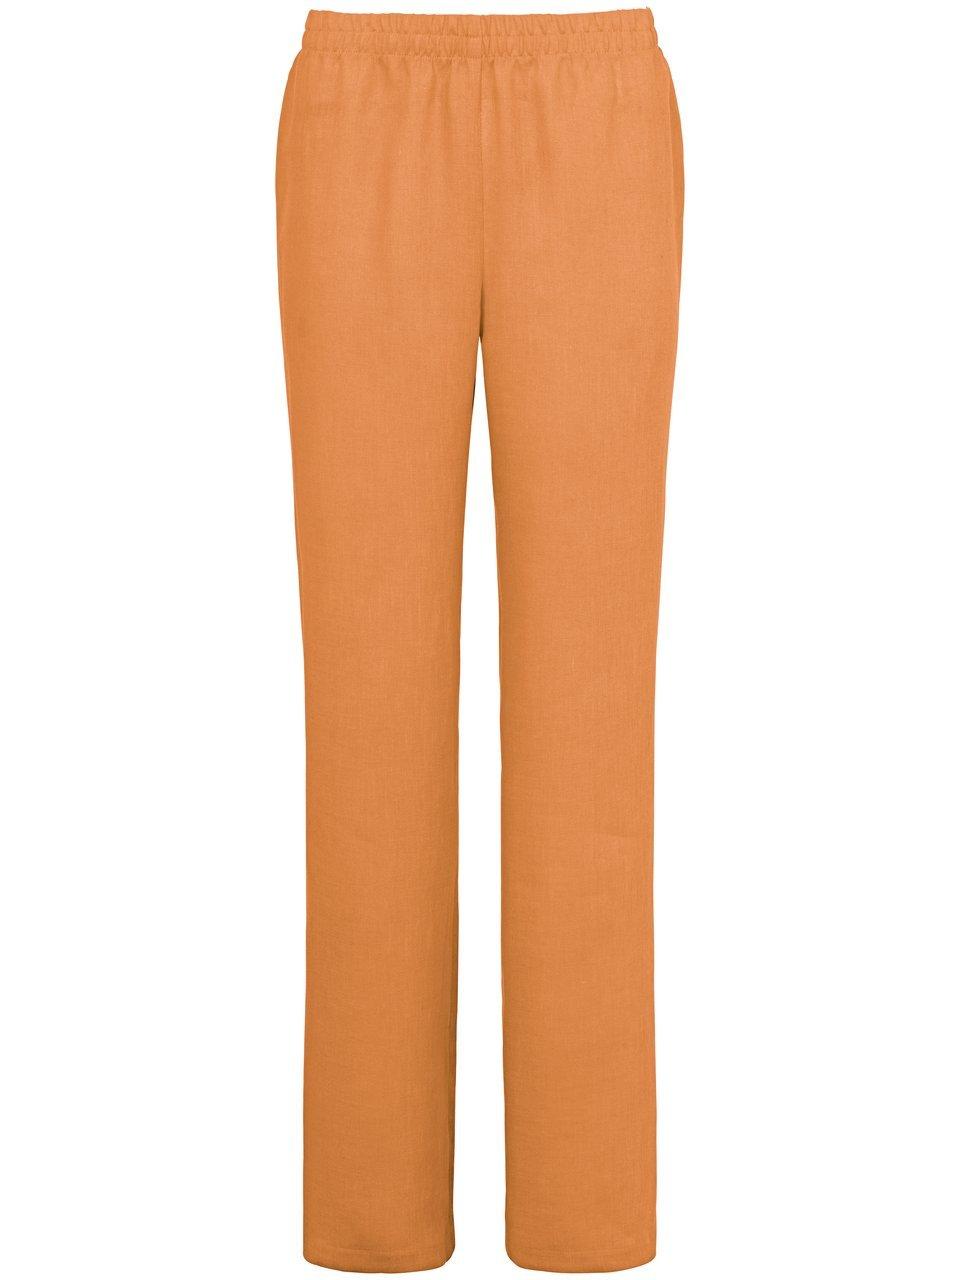 Le pantalon 100% lin  Peter Hahn orange